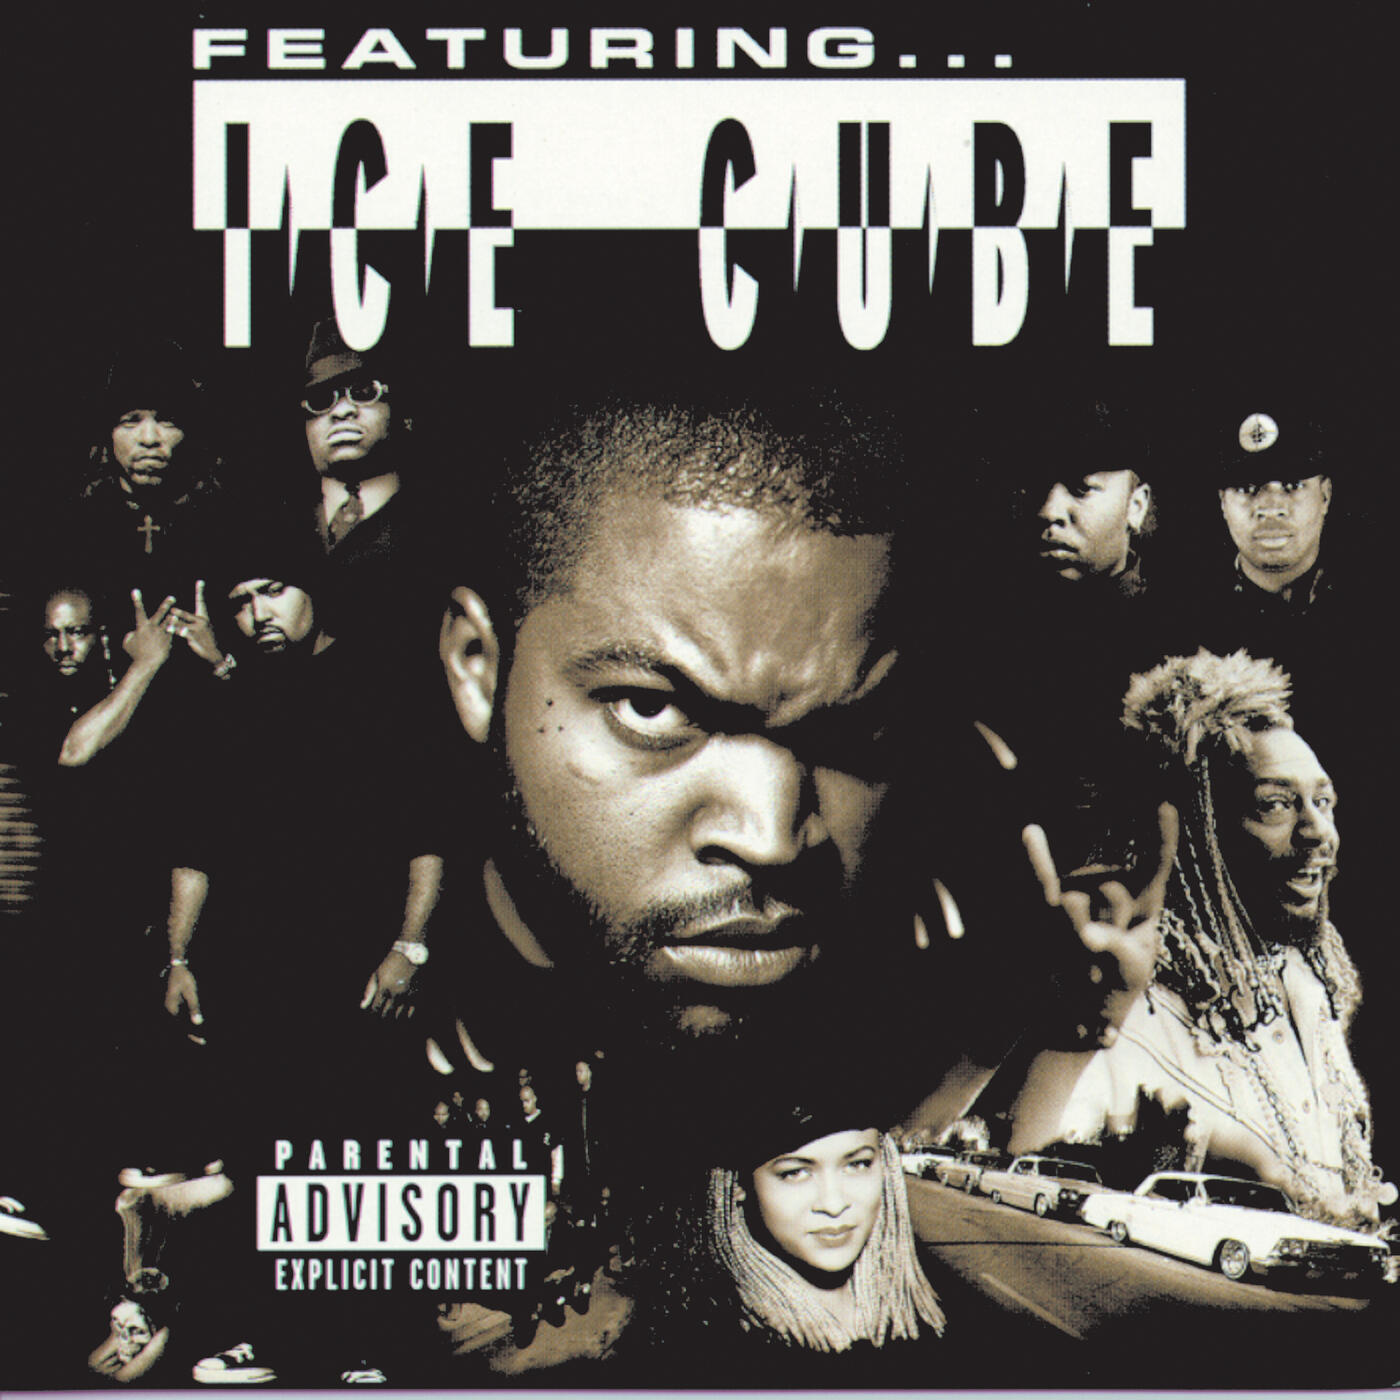 Ice cube feat. Ice Cube. Ice Cube альбомы. Ice Cube обложка. Ice Cube обложки альбомов.